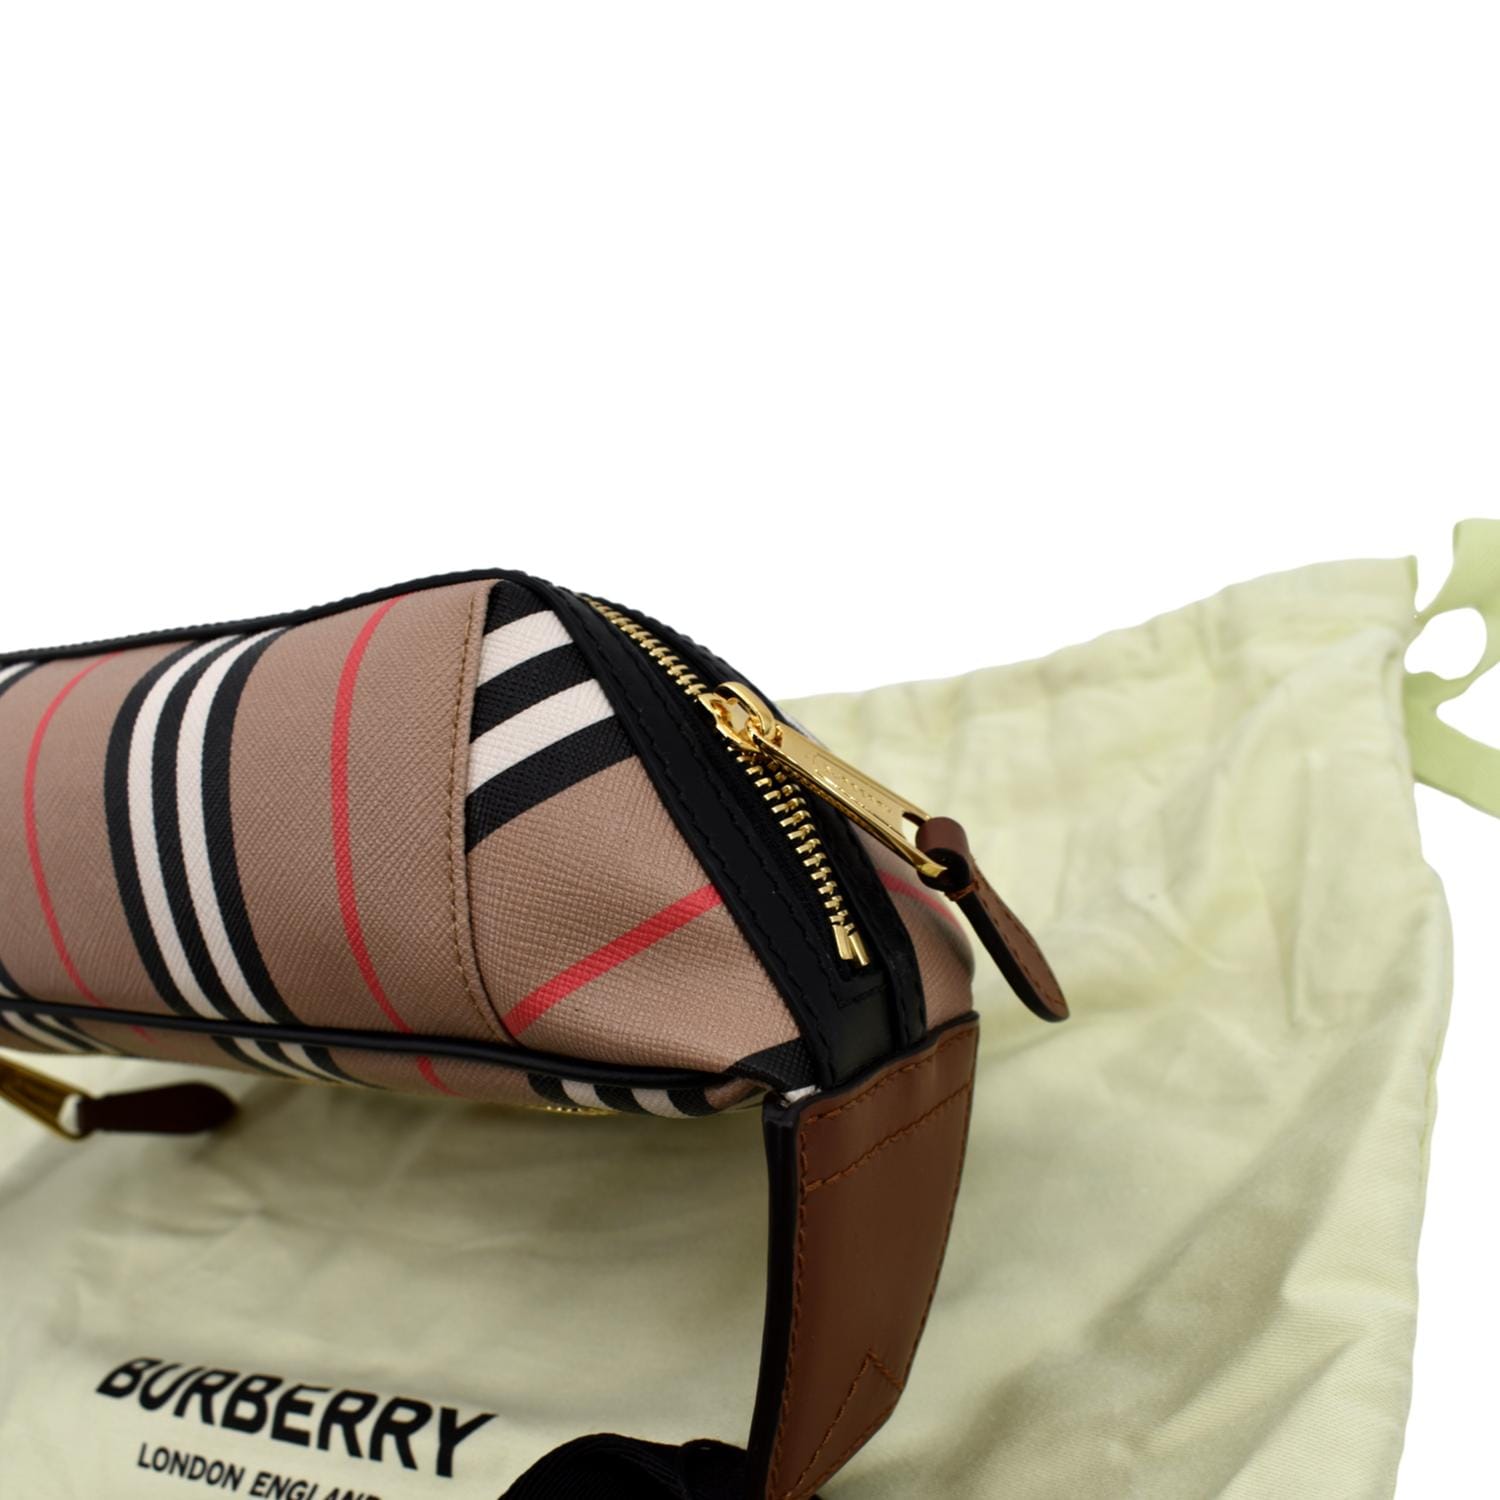 Burberry Medium Sonny Check Canvas Belt Bag